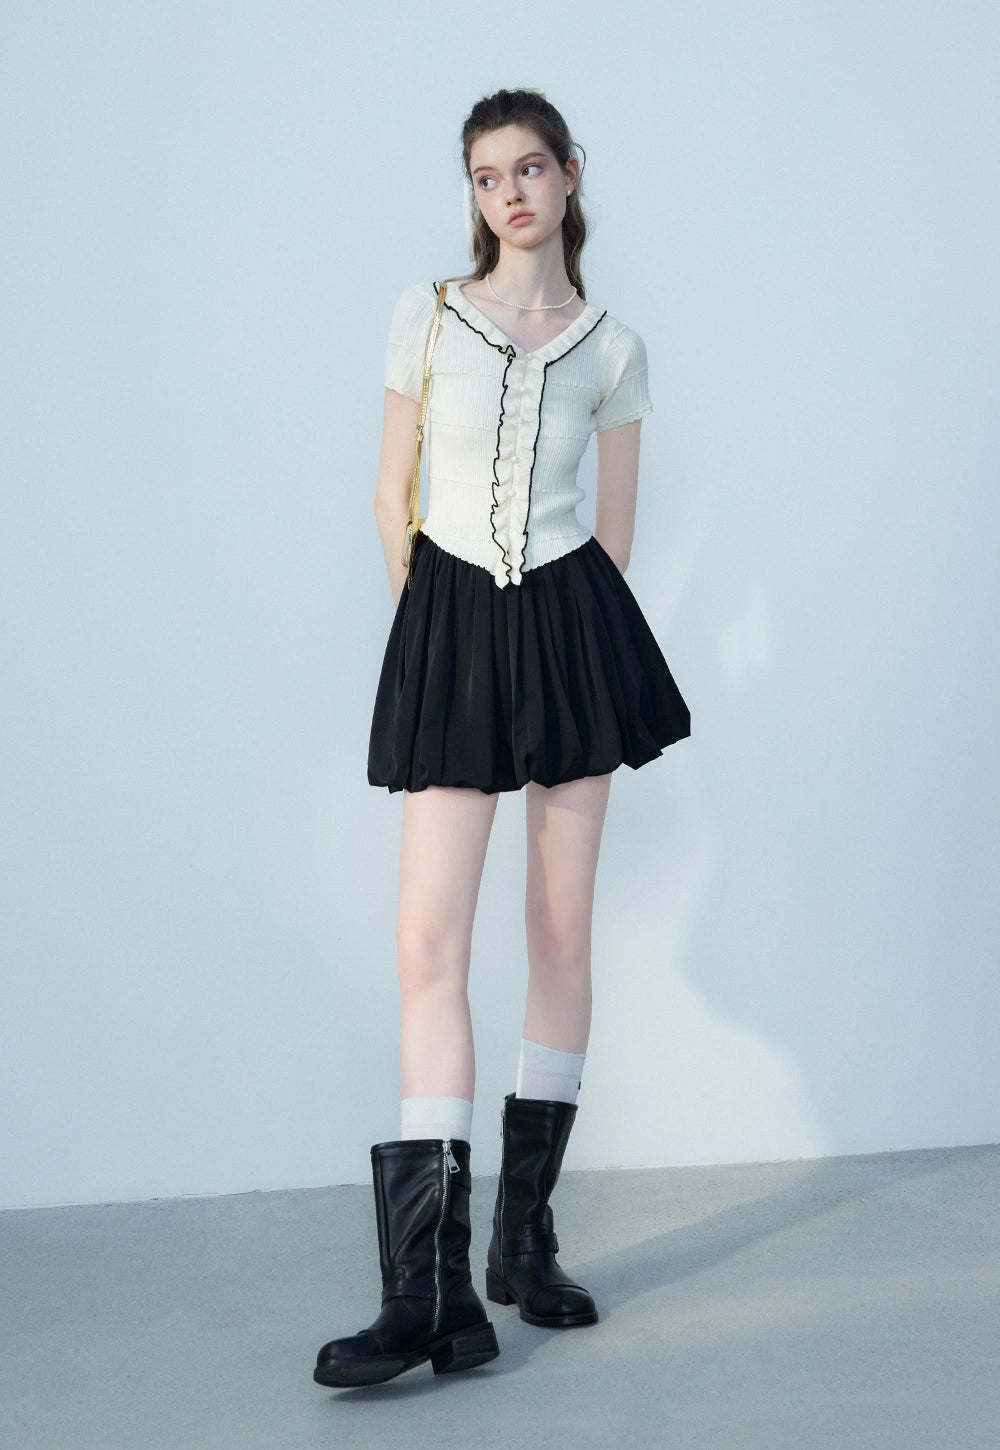 Women's Black Pleated Mini Skirt - Elastic Waist, Comfort Fit, Stylish for Everyday Wear